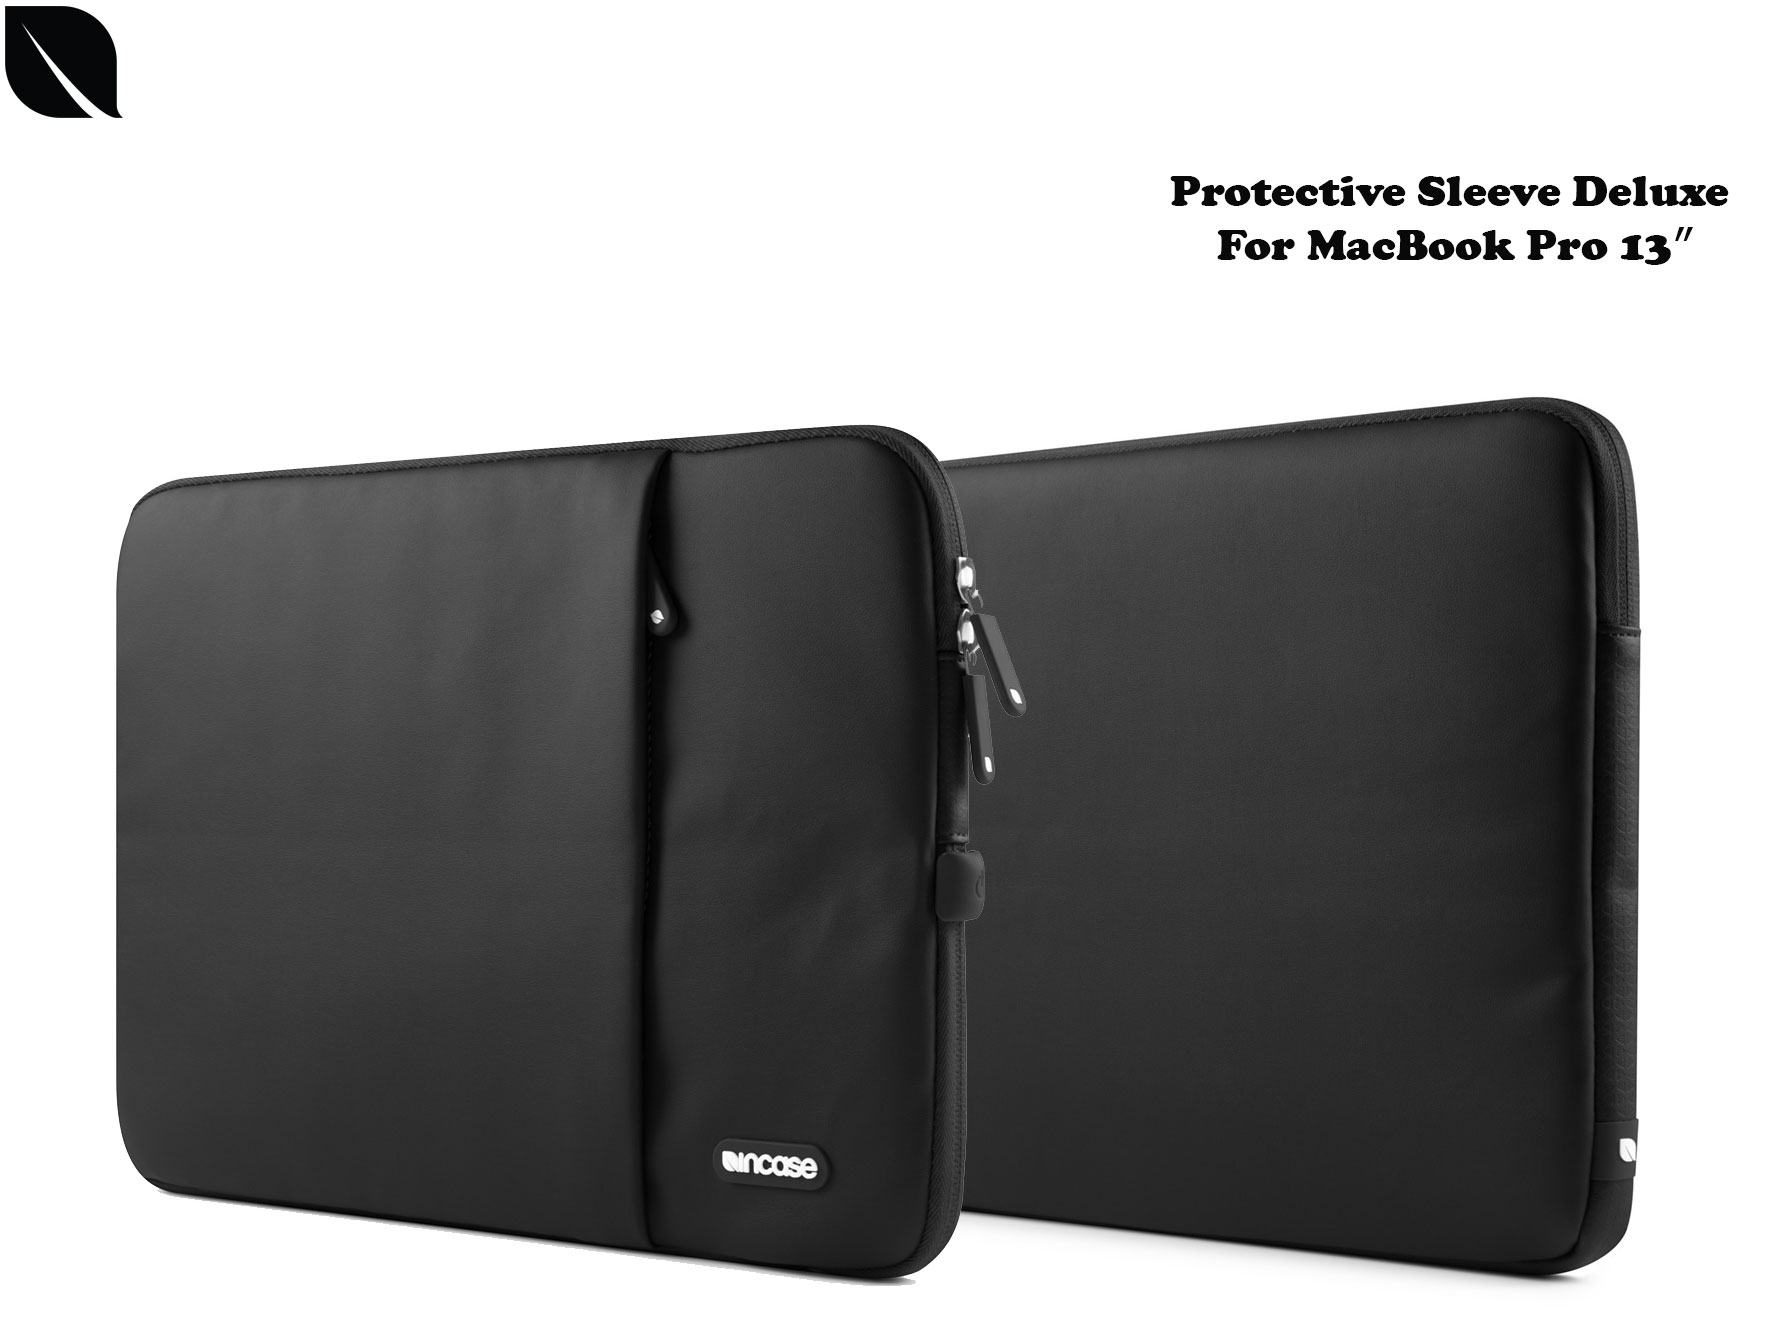 Incase Protective Sleeve Deluxe for MacBook Pro 13 inch